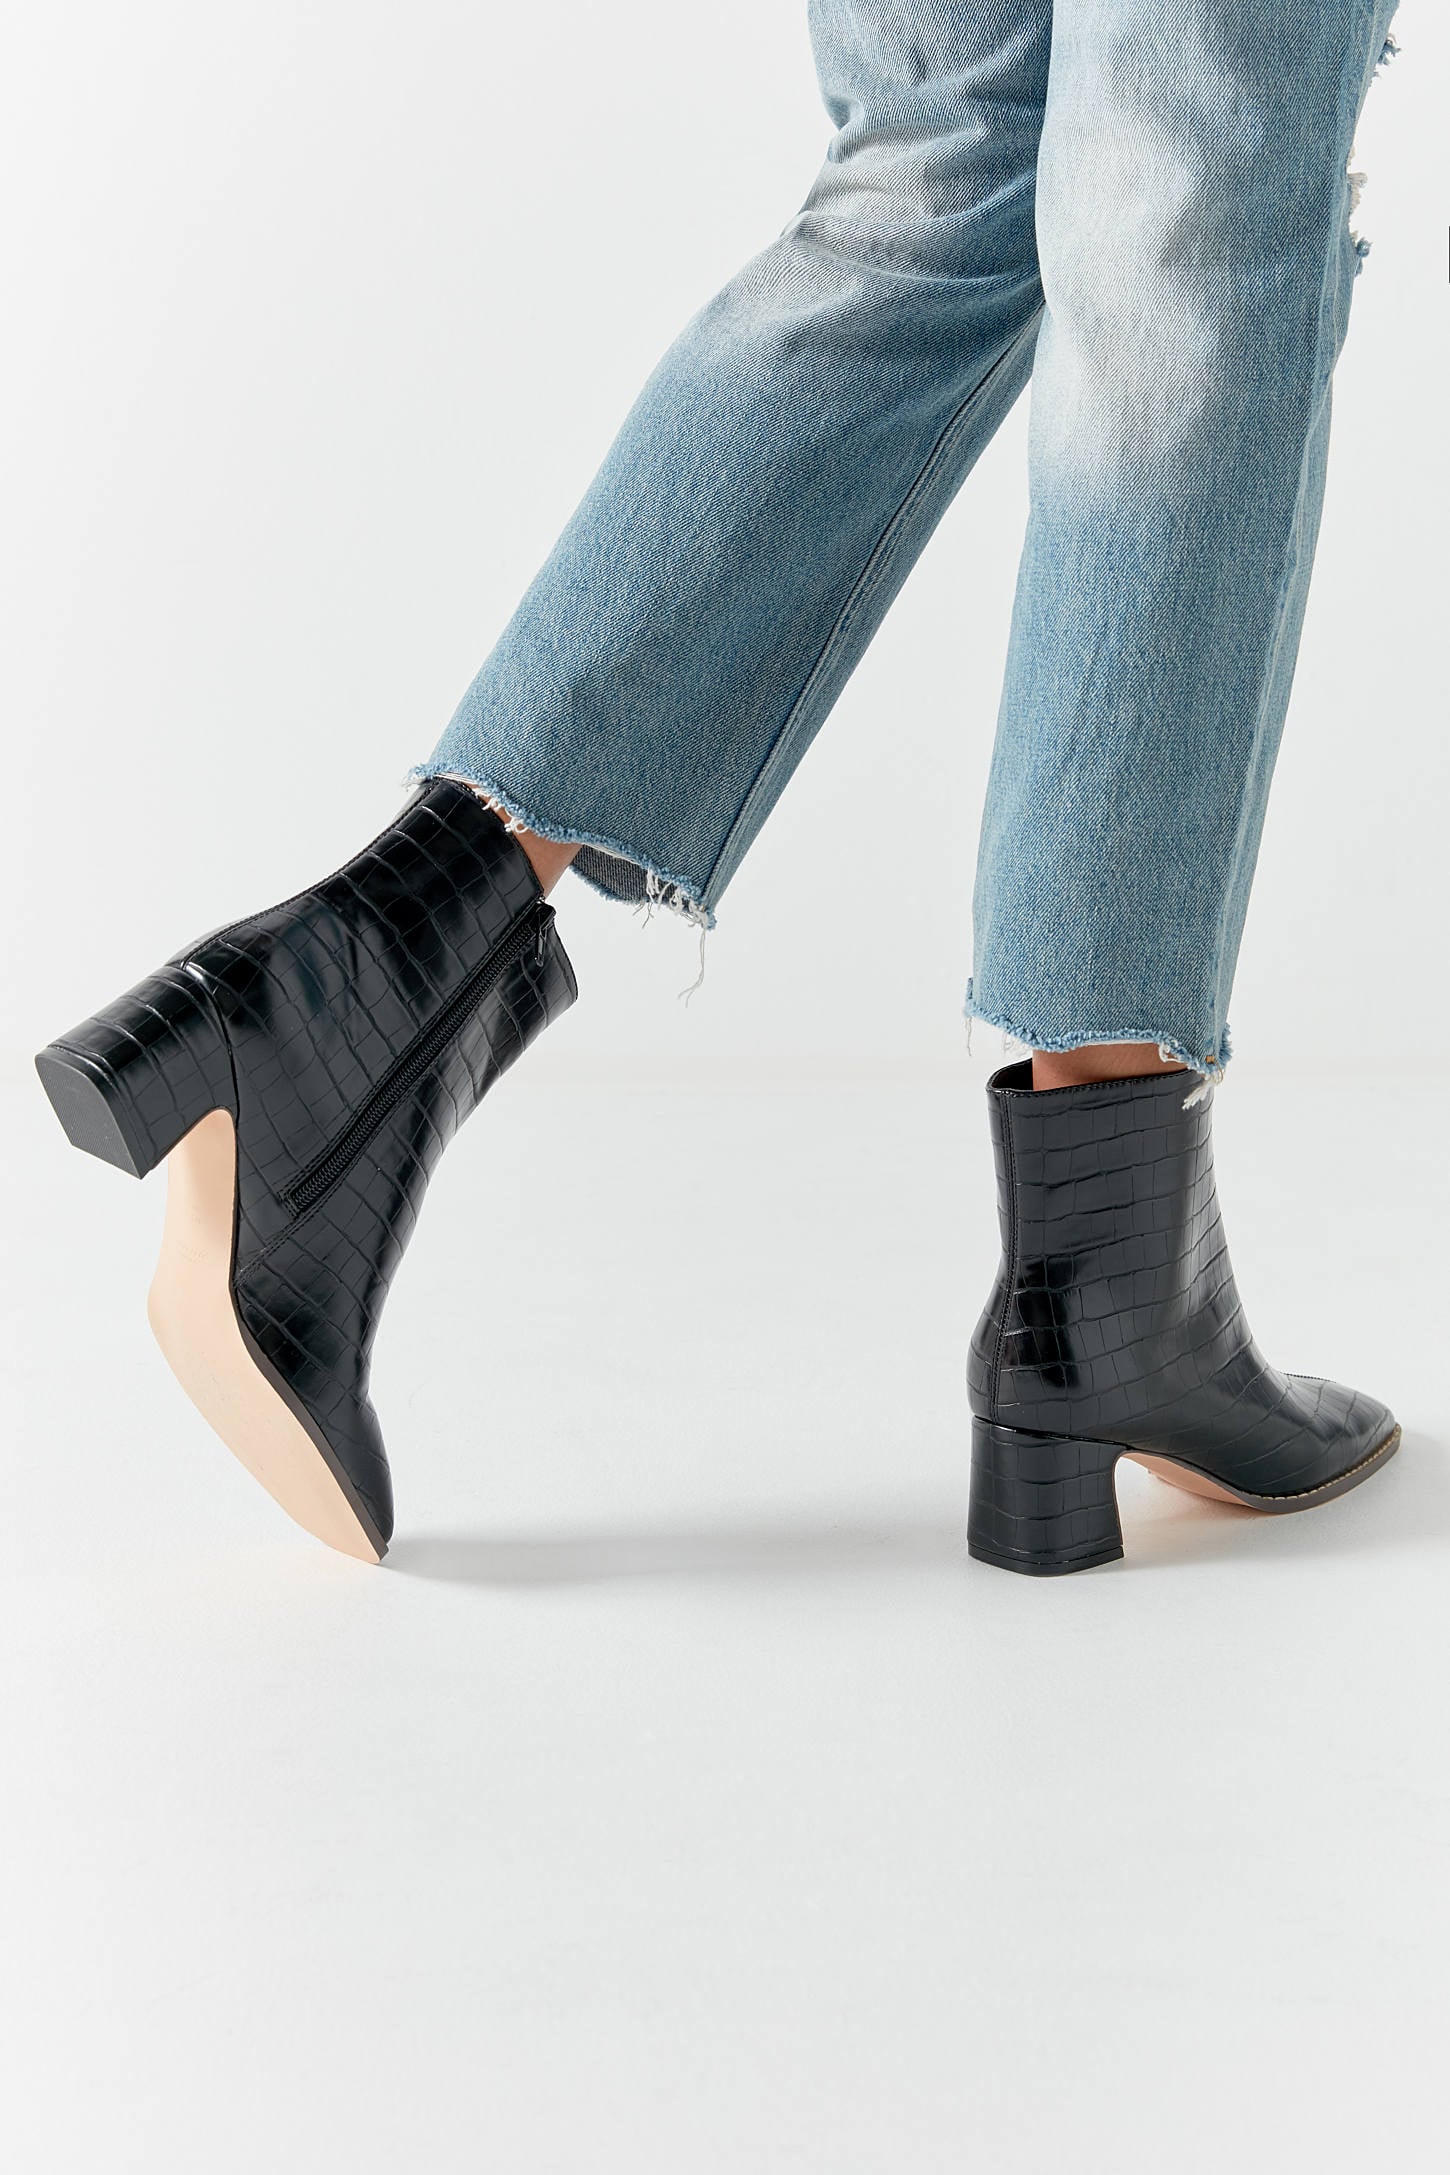 Best Black Boots For Women | POPSUGAR 